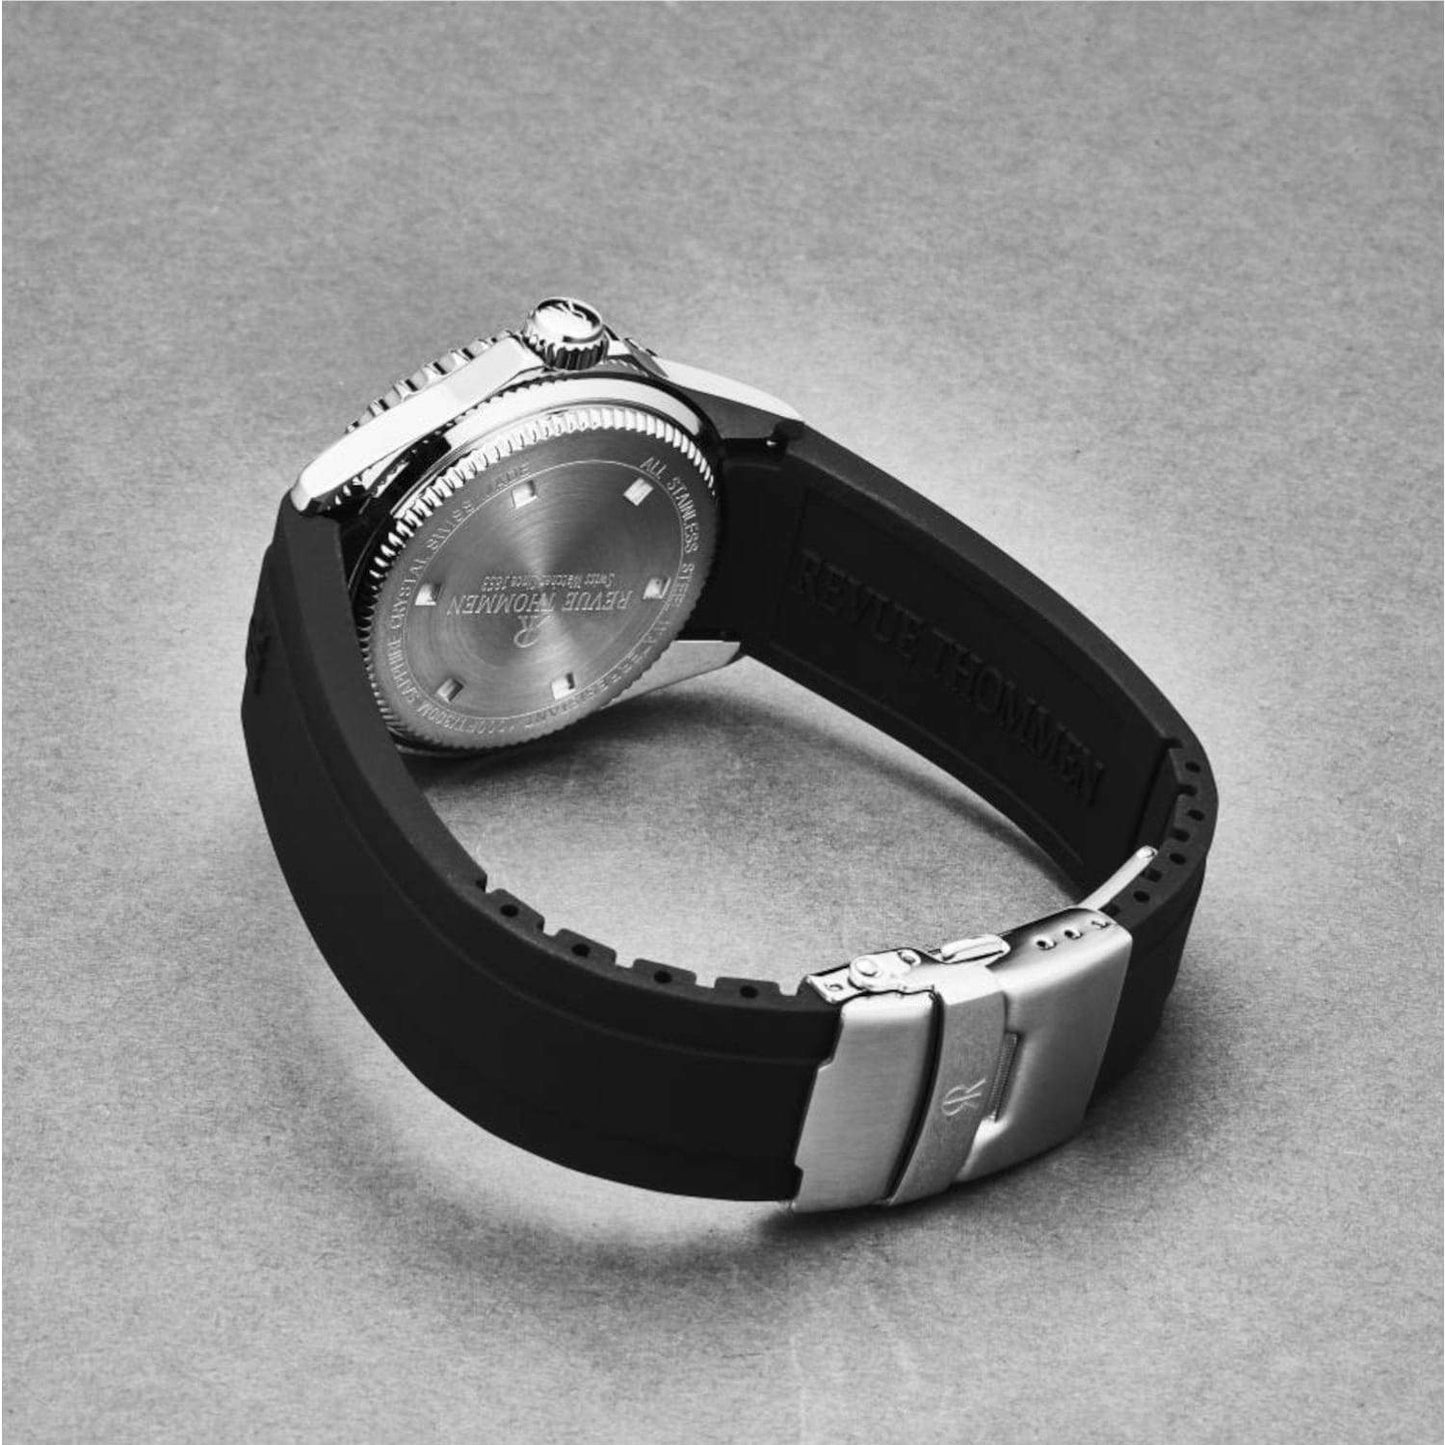 Revue Thommen 17571.2827 Men's 'Diver' Silver Dial Rubber Strap Swiss Automatic Watch